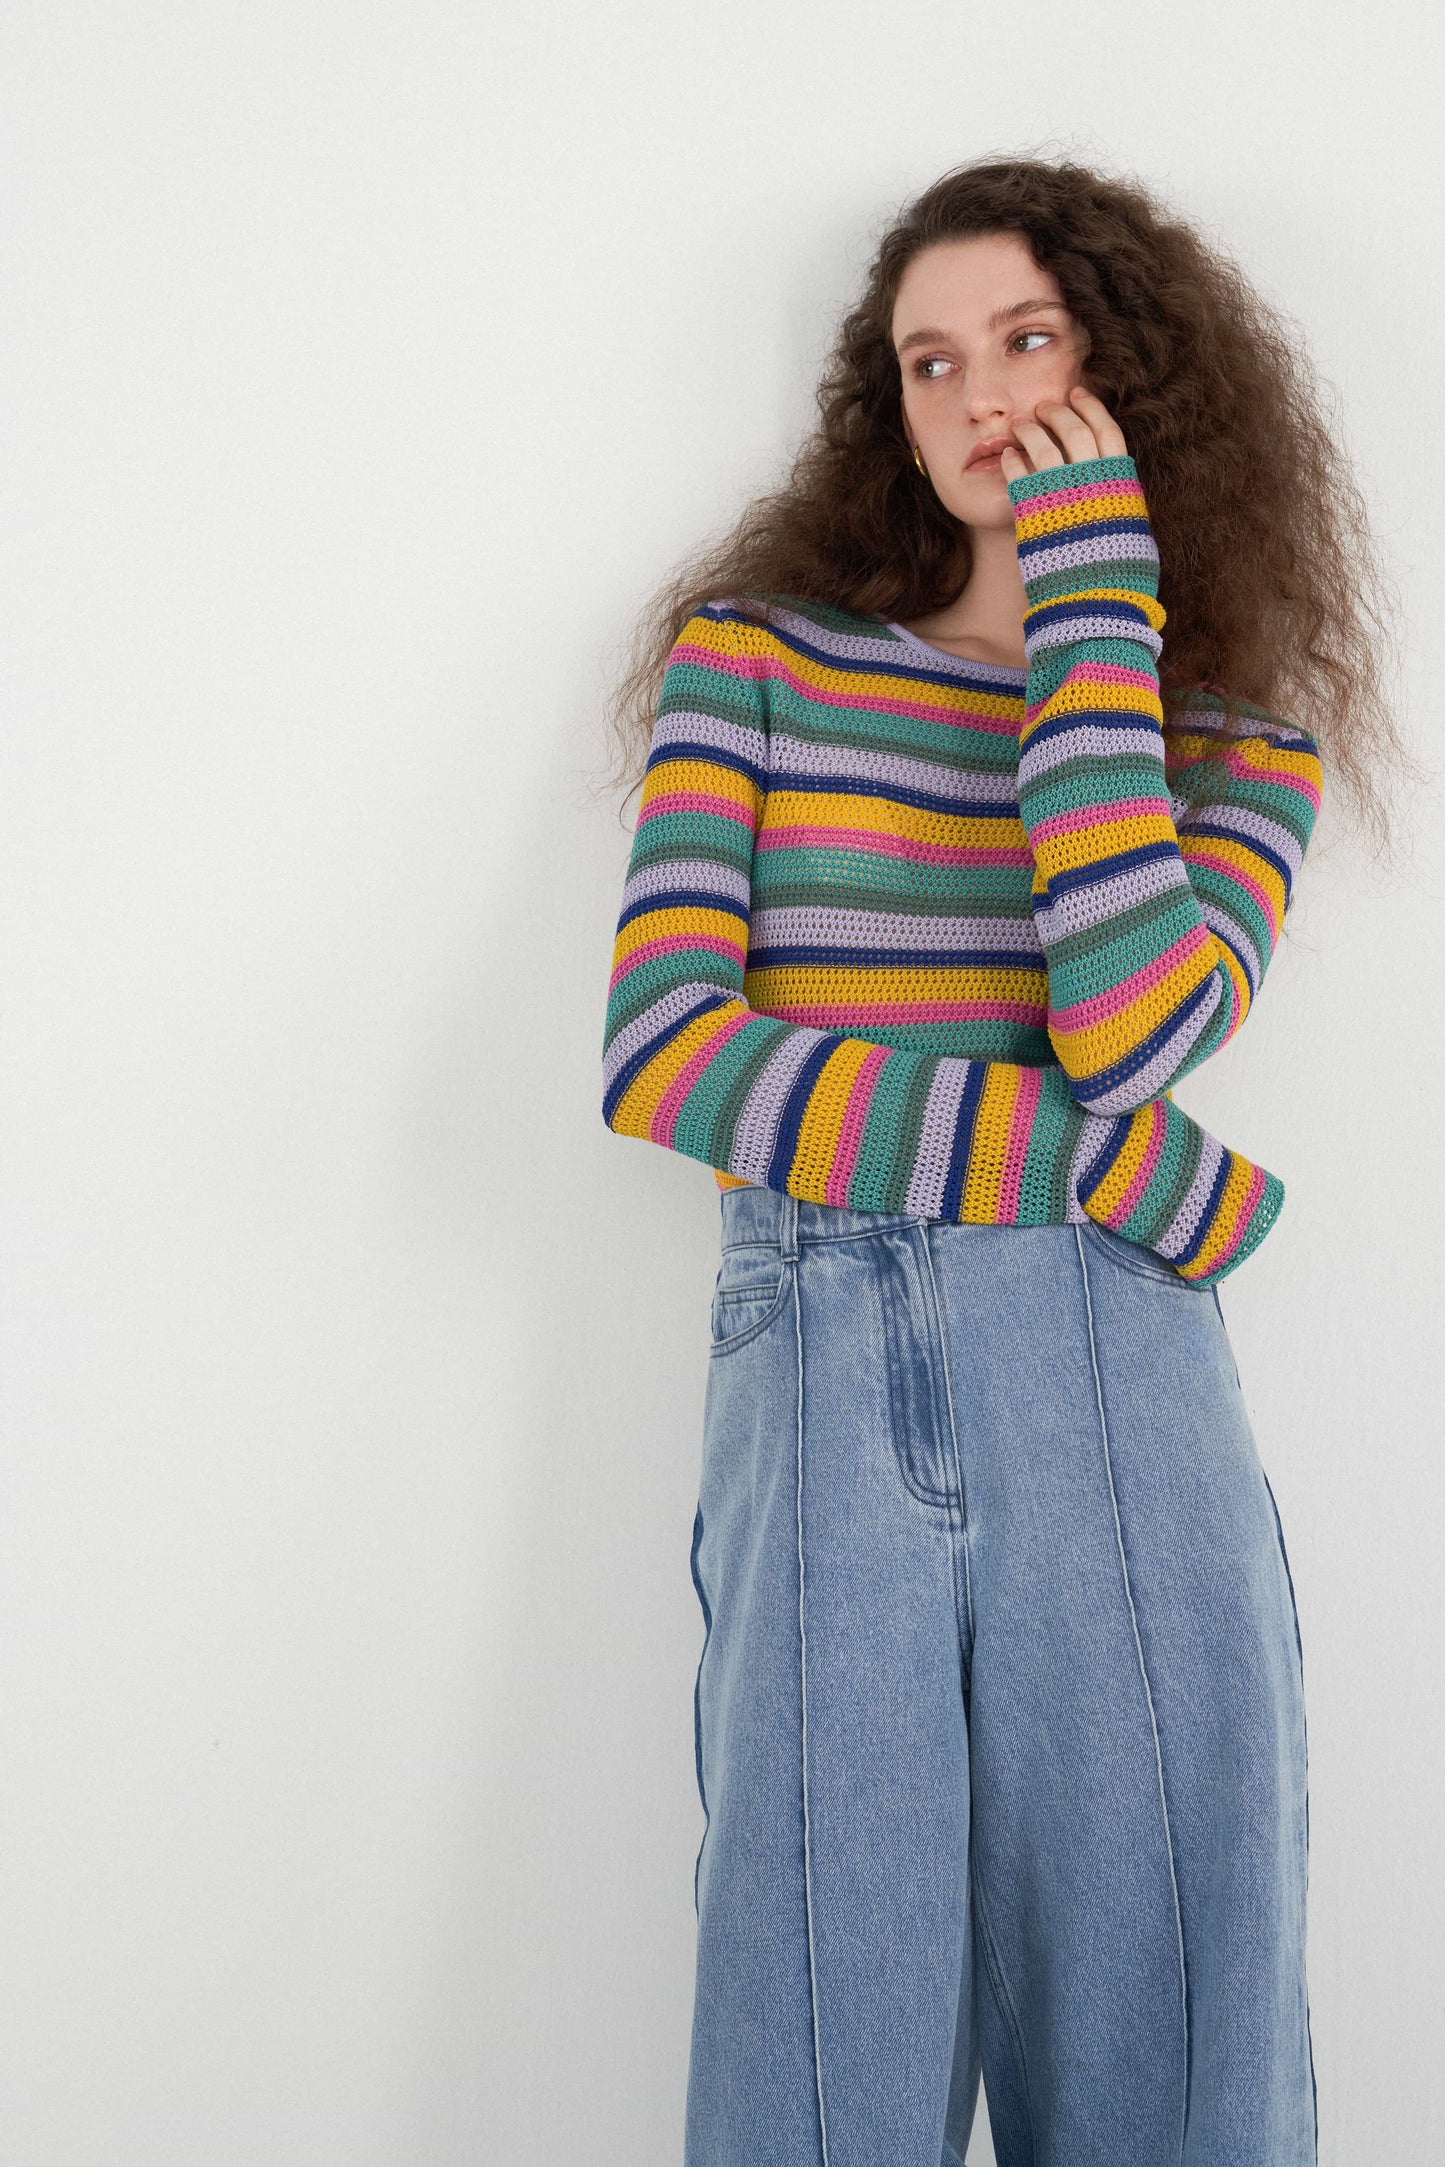 Rainbow Striped Knit Top in Cotton Yarn